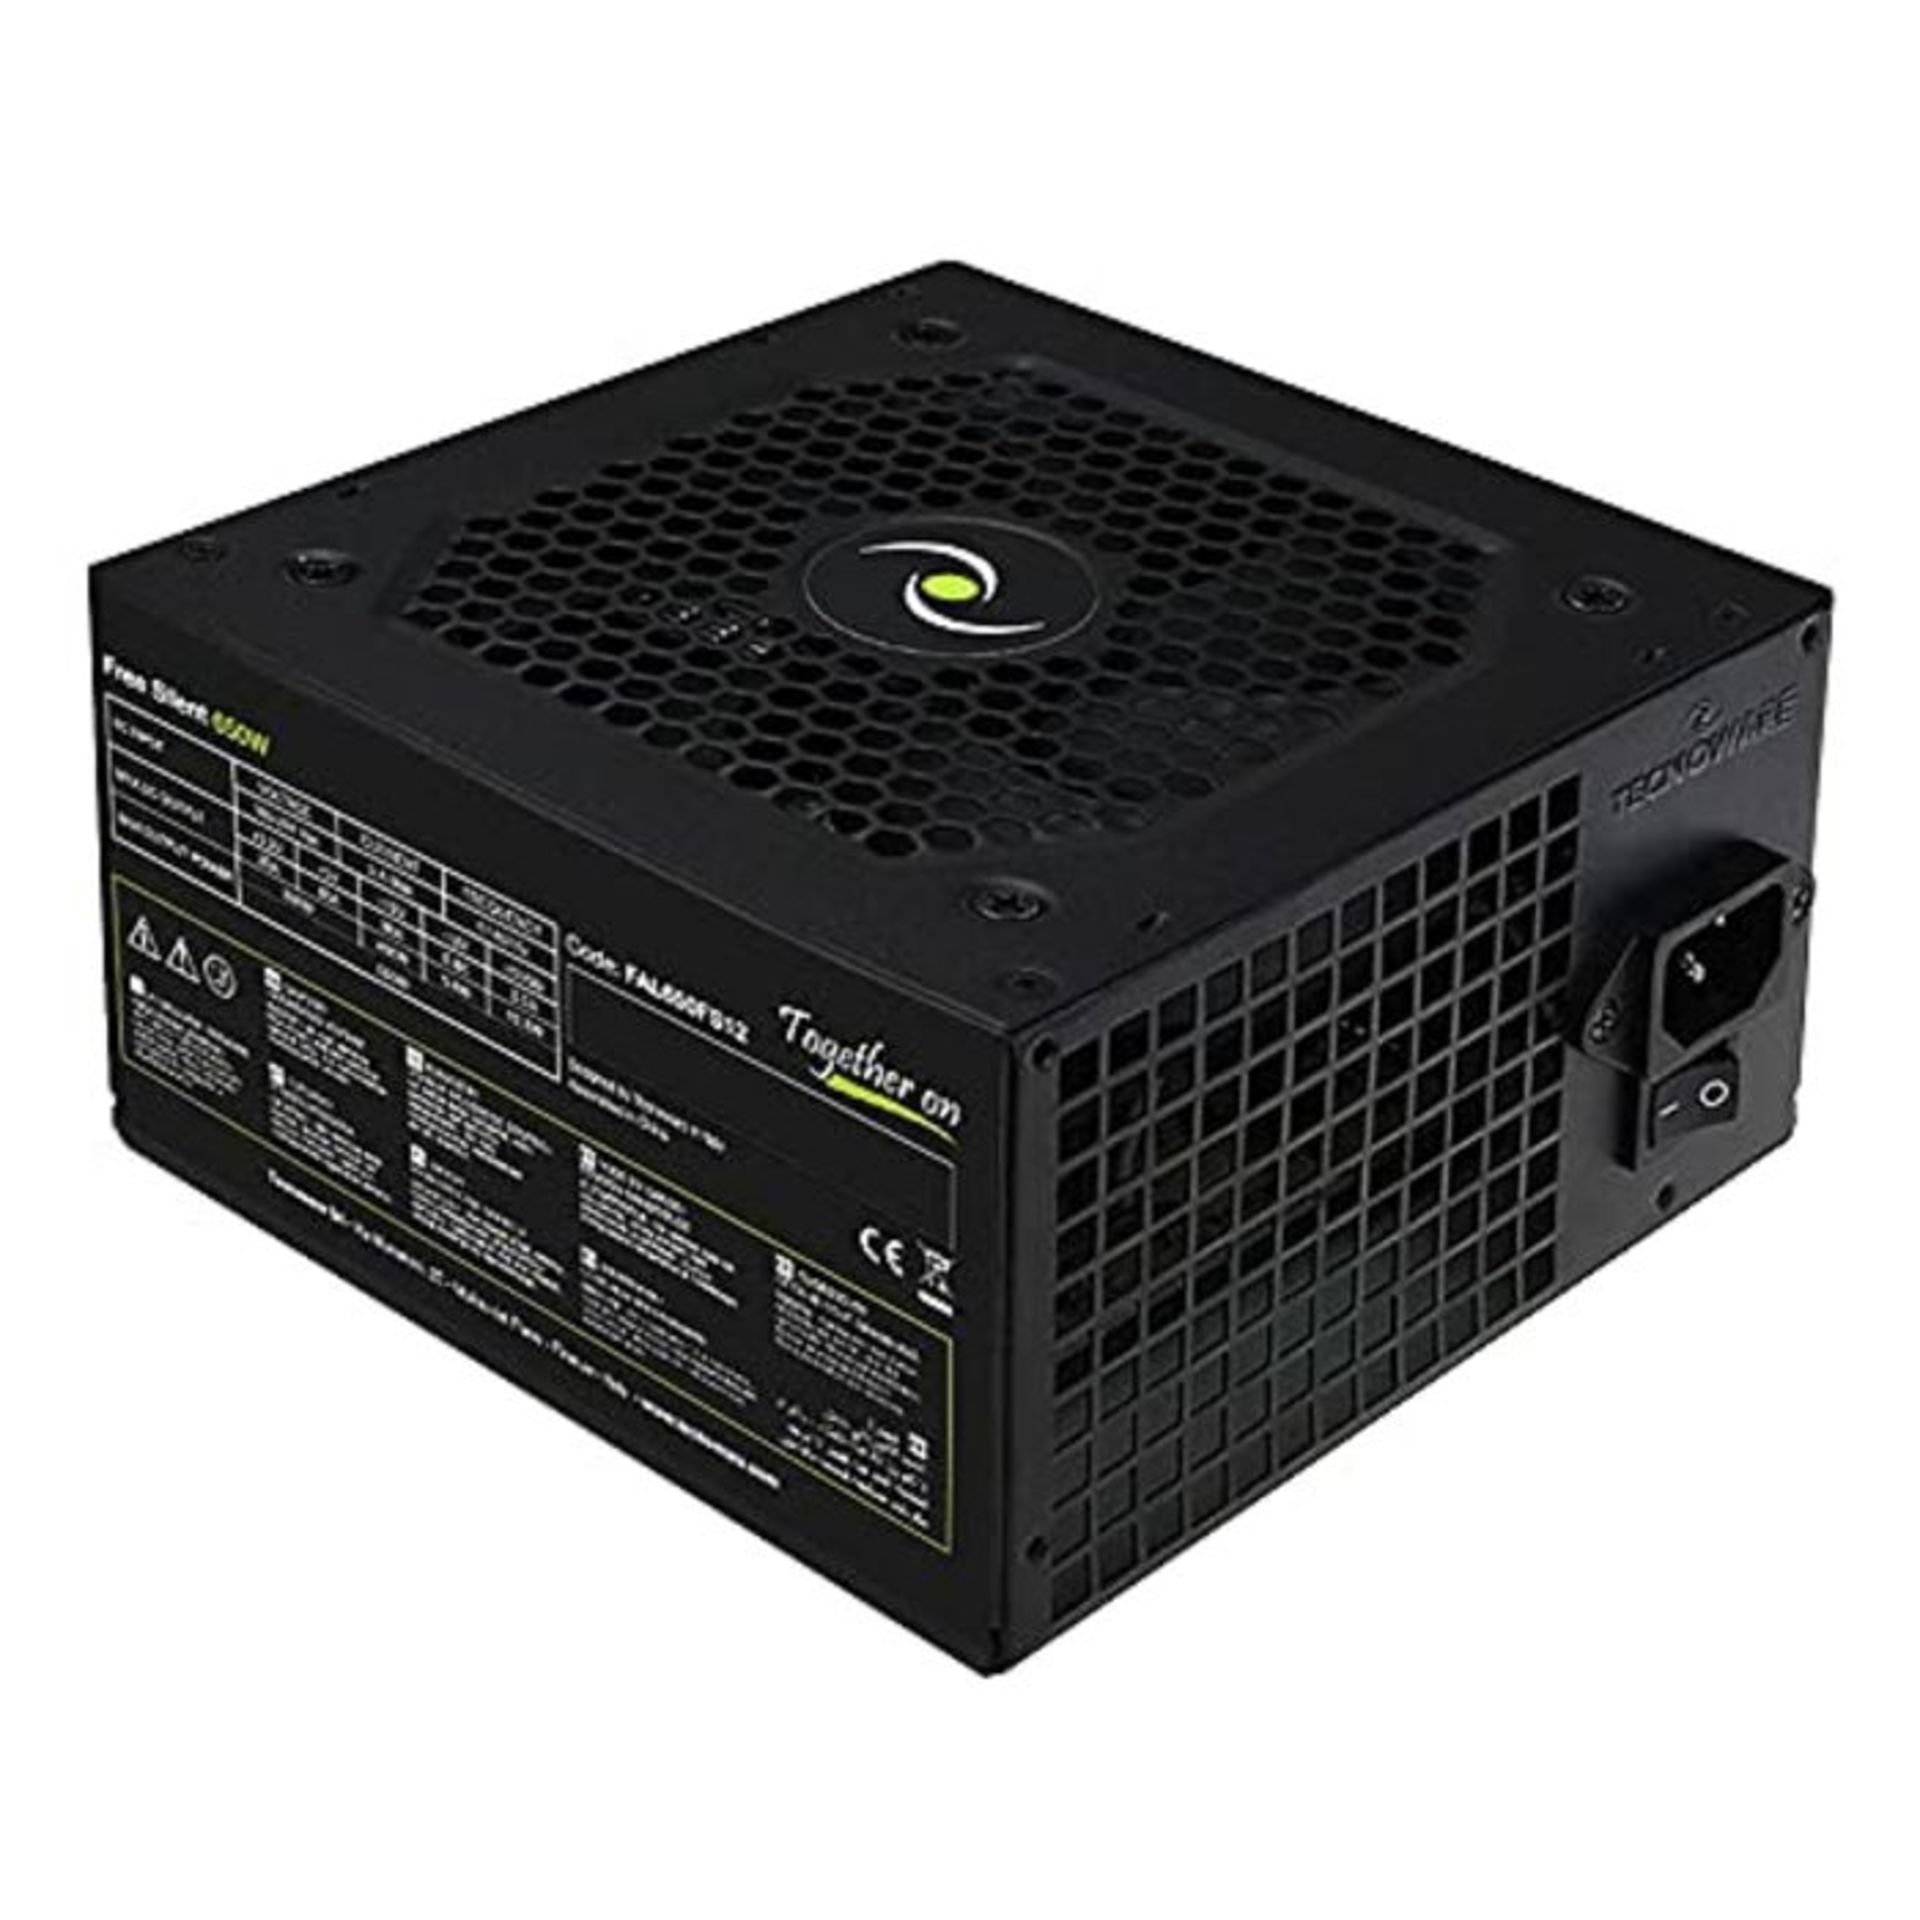 Tecnoware ATX 650 W Power Supply for PC - Silent 12 cm Fan - Connectors 3 x SATA, 1 x